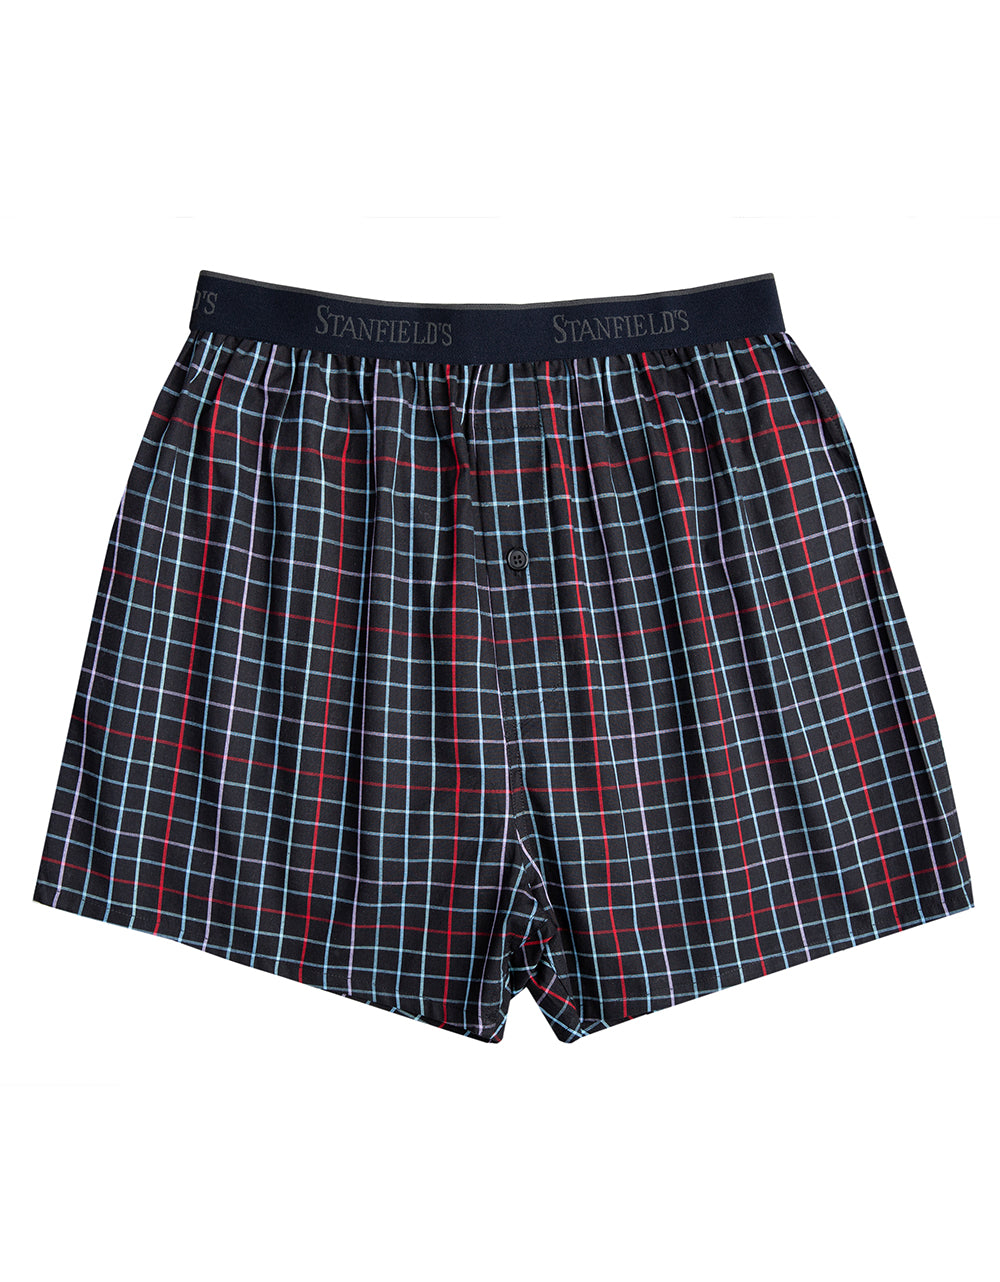 IDENTITY Mens woven boxer shorts wholesale, wholesalers of mens